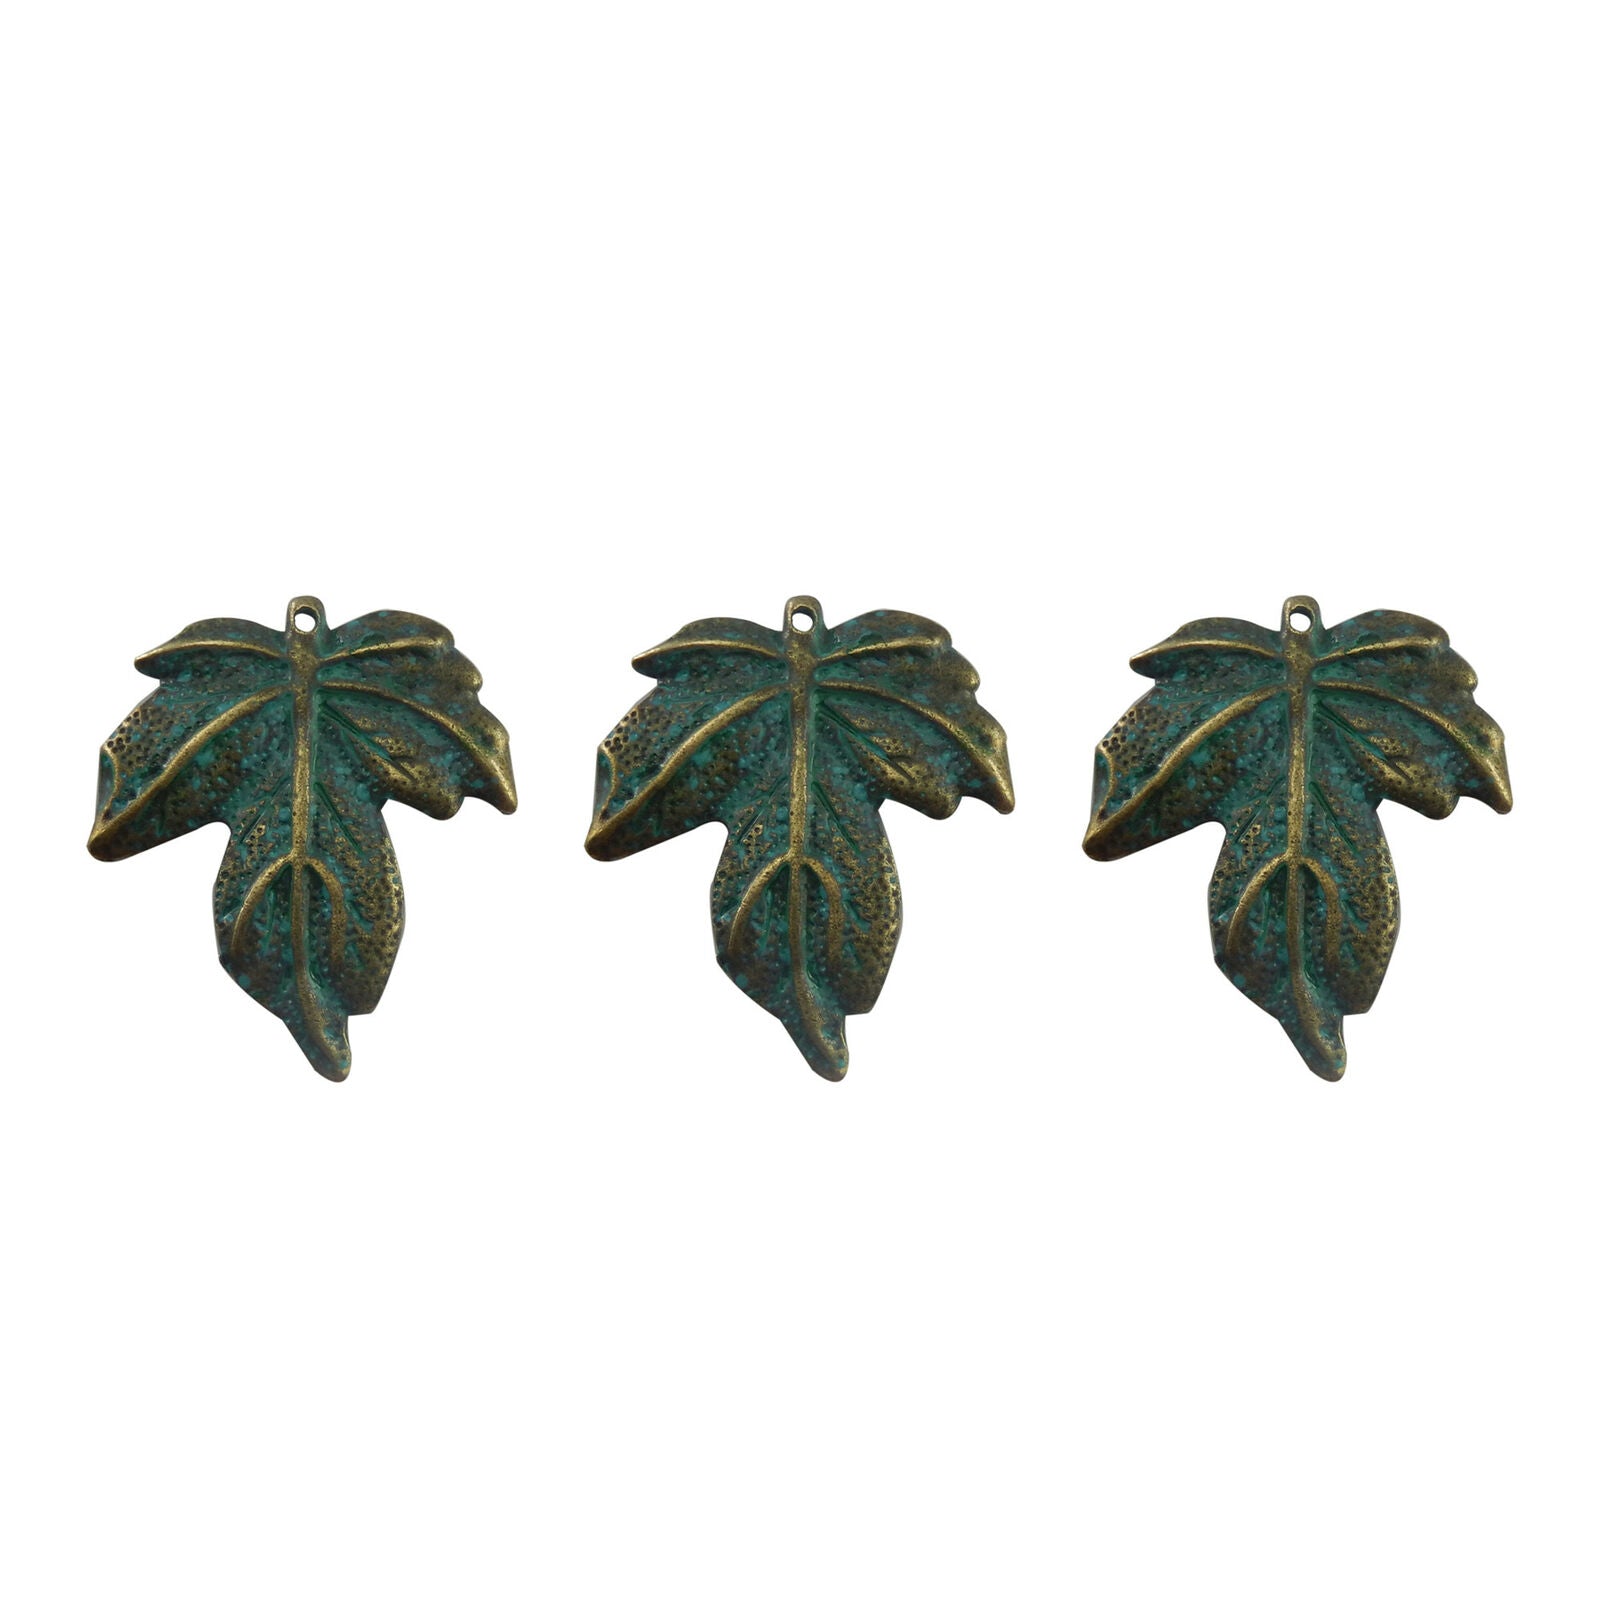 10 pcs Antiqued Zinc Alloy Green Maple Leaf Charms Pendant Findings 65x48mm